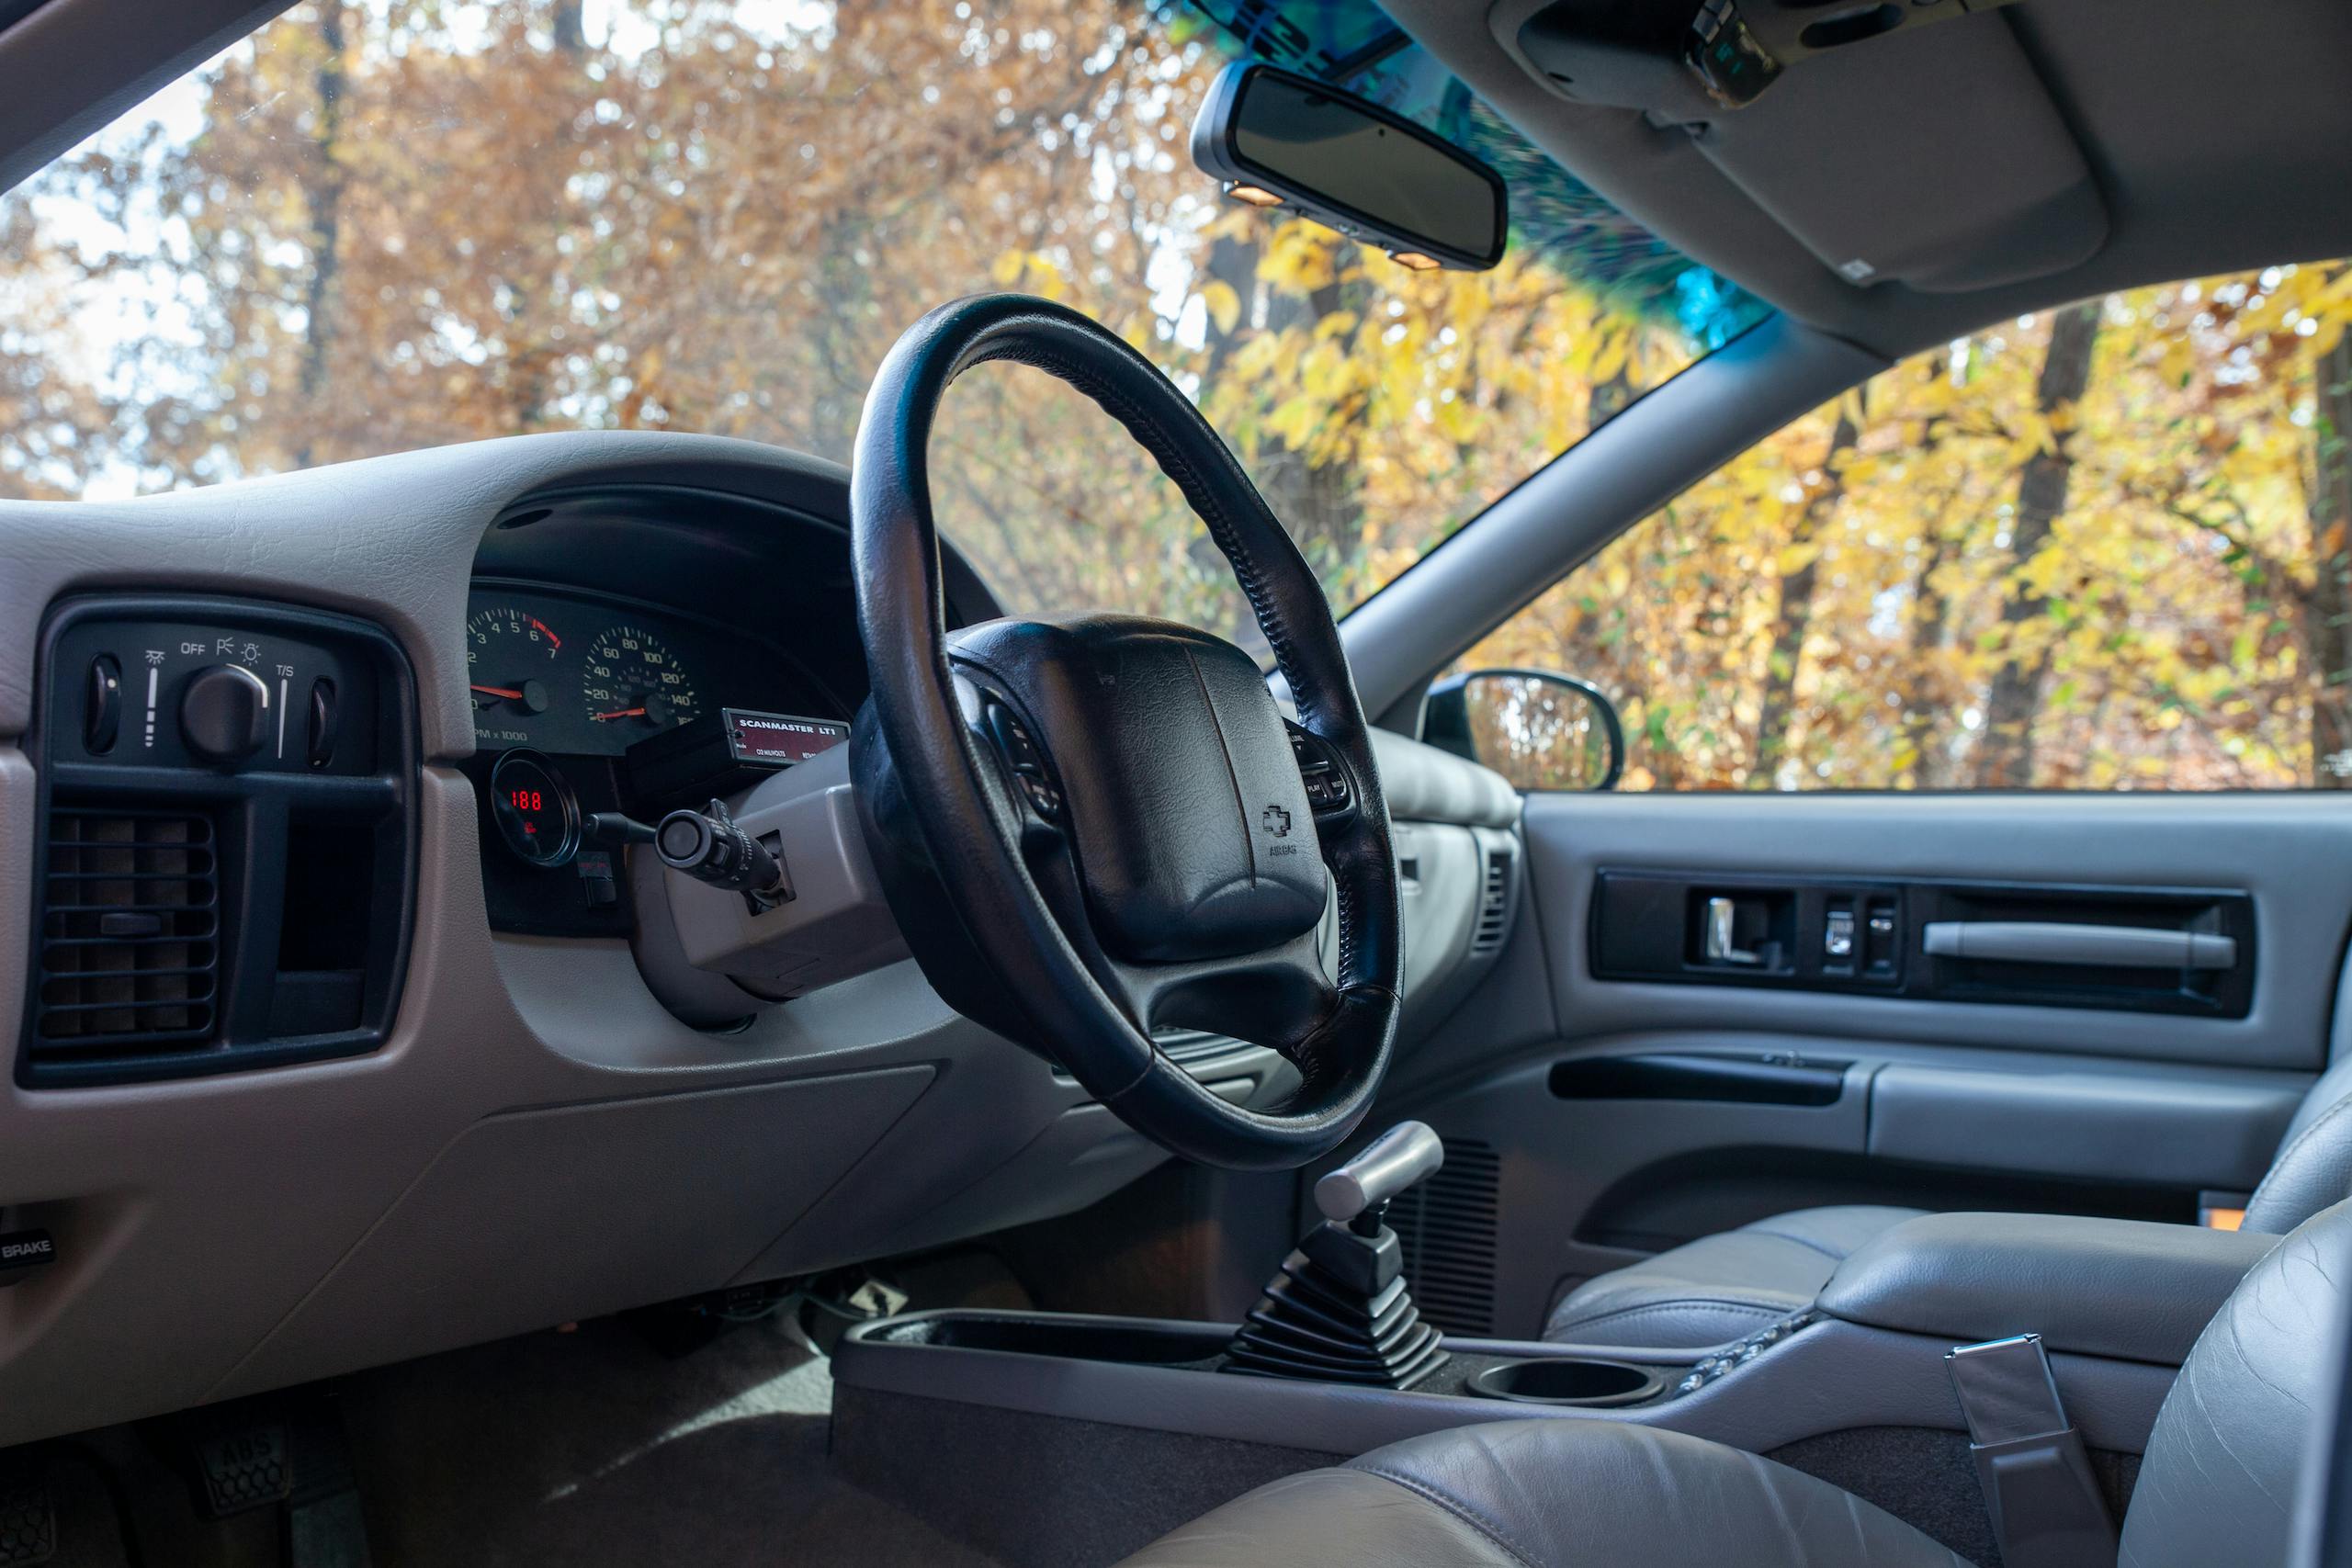 1996 Chevrolet Impala SS interior steering wheel low angle